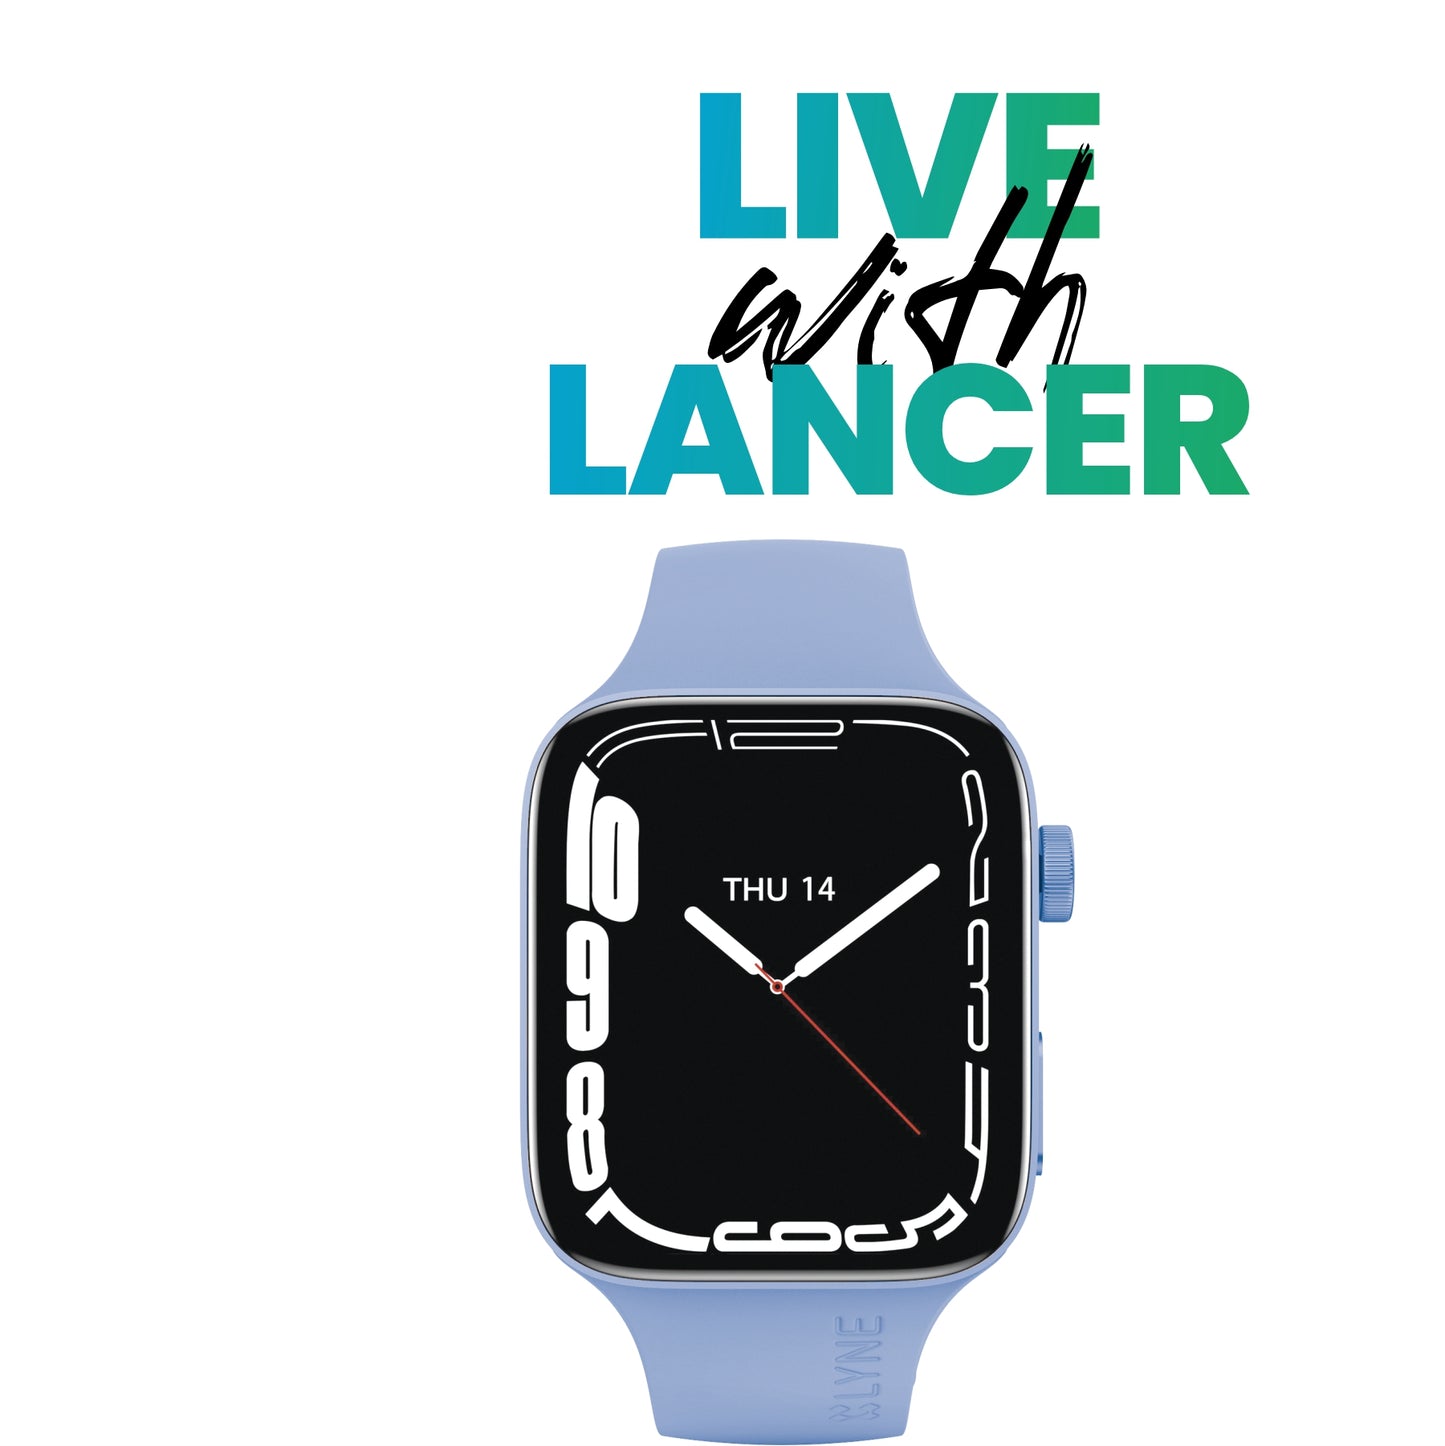 LYNE Lancer 4 Smart Watch 1.75" HD Screen, Bluetooth Calling & IP67 Water Resistance